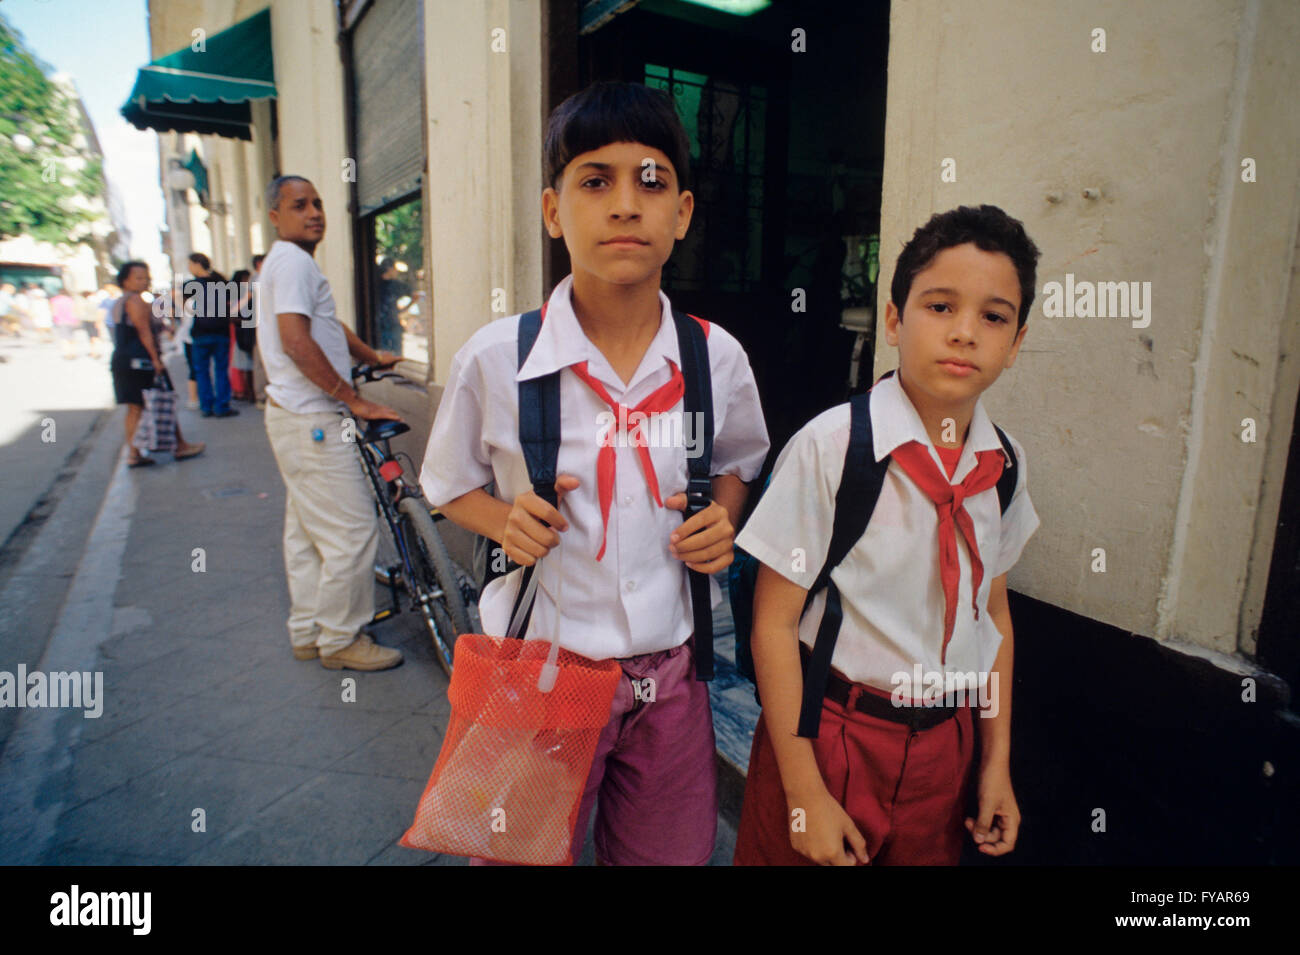 Cuba, Santa Clara, school kids with Pioneer scarves Stock Photo